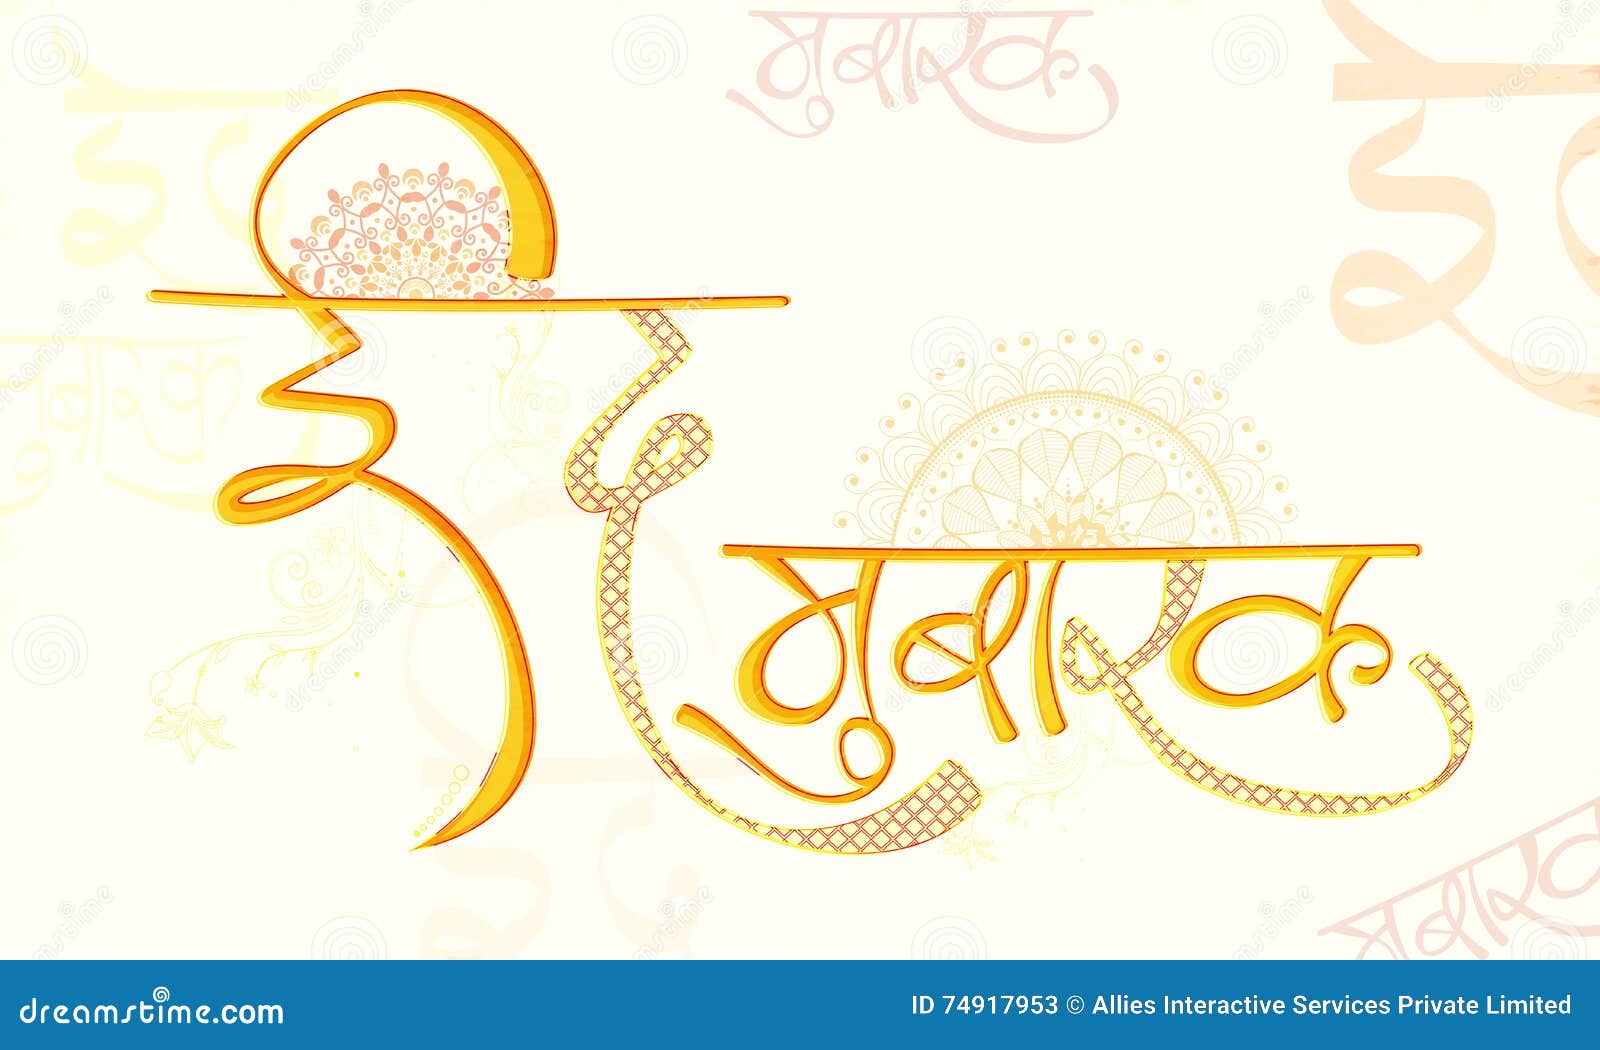 Greeting Card With Hindi Text For Eid Mubarak Stock Illustration